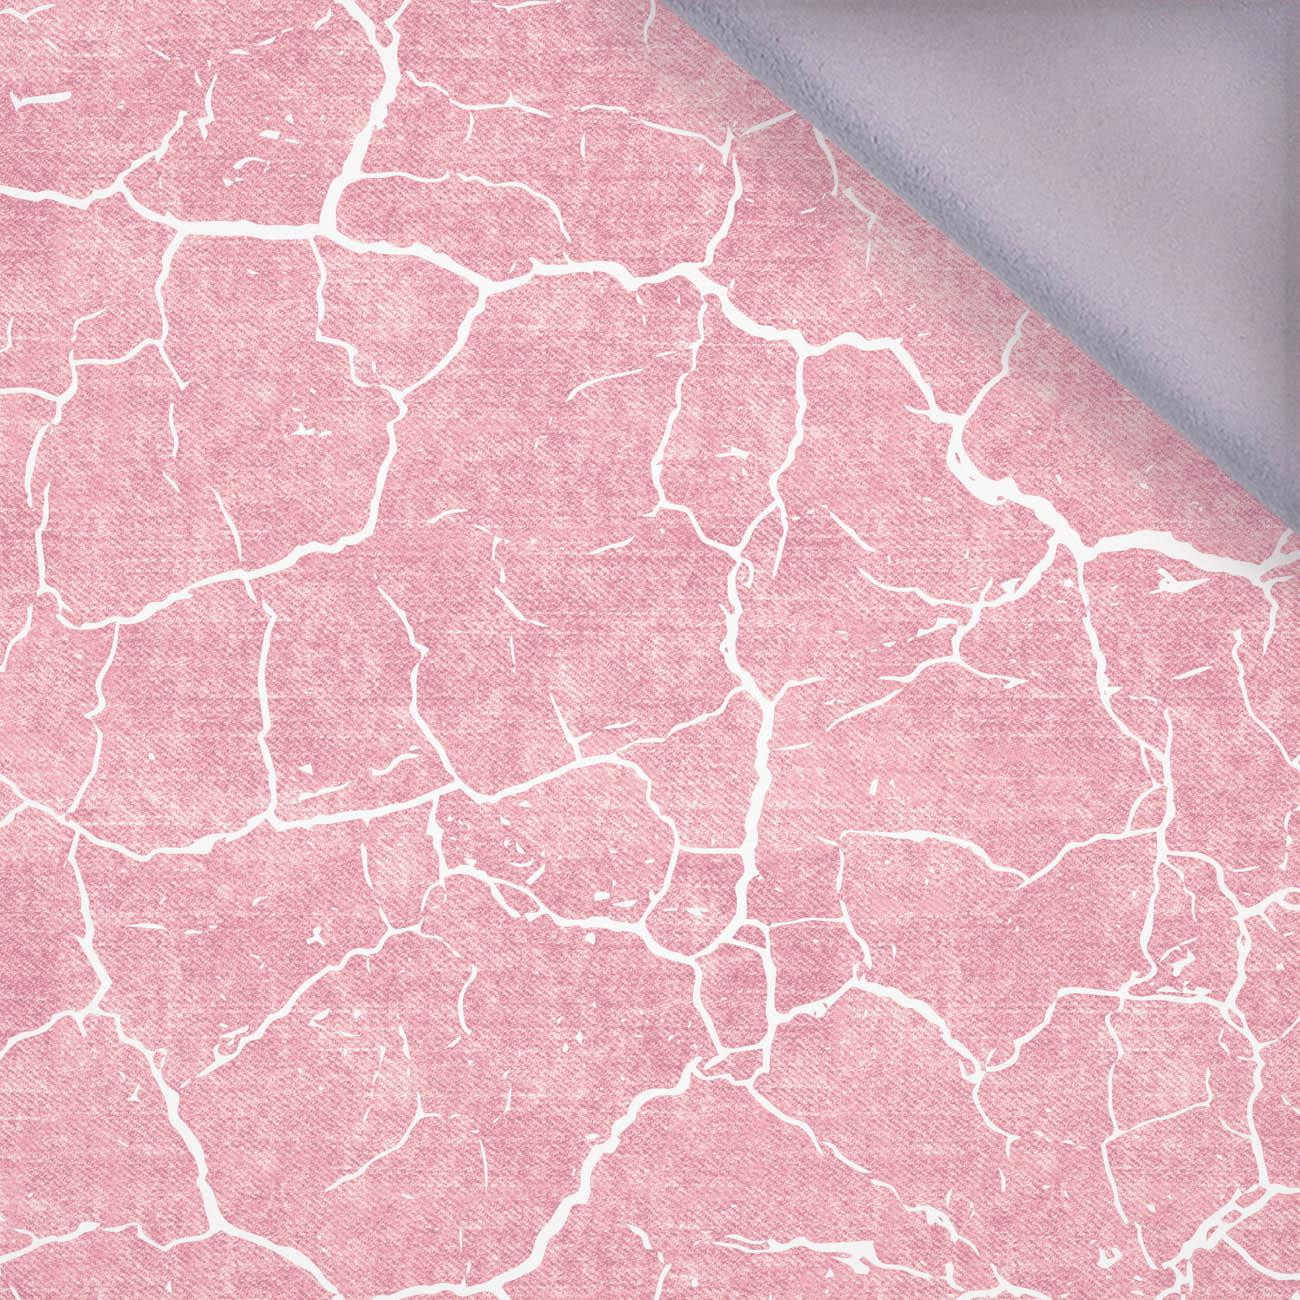 SCORCHED EARTH (white) / ACID WASH (rose quartz) - softshell